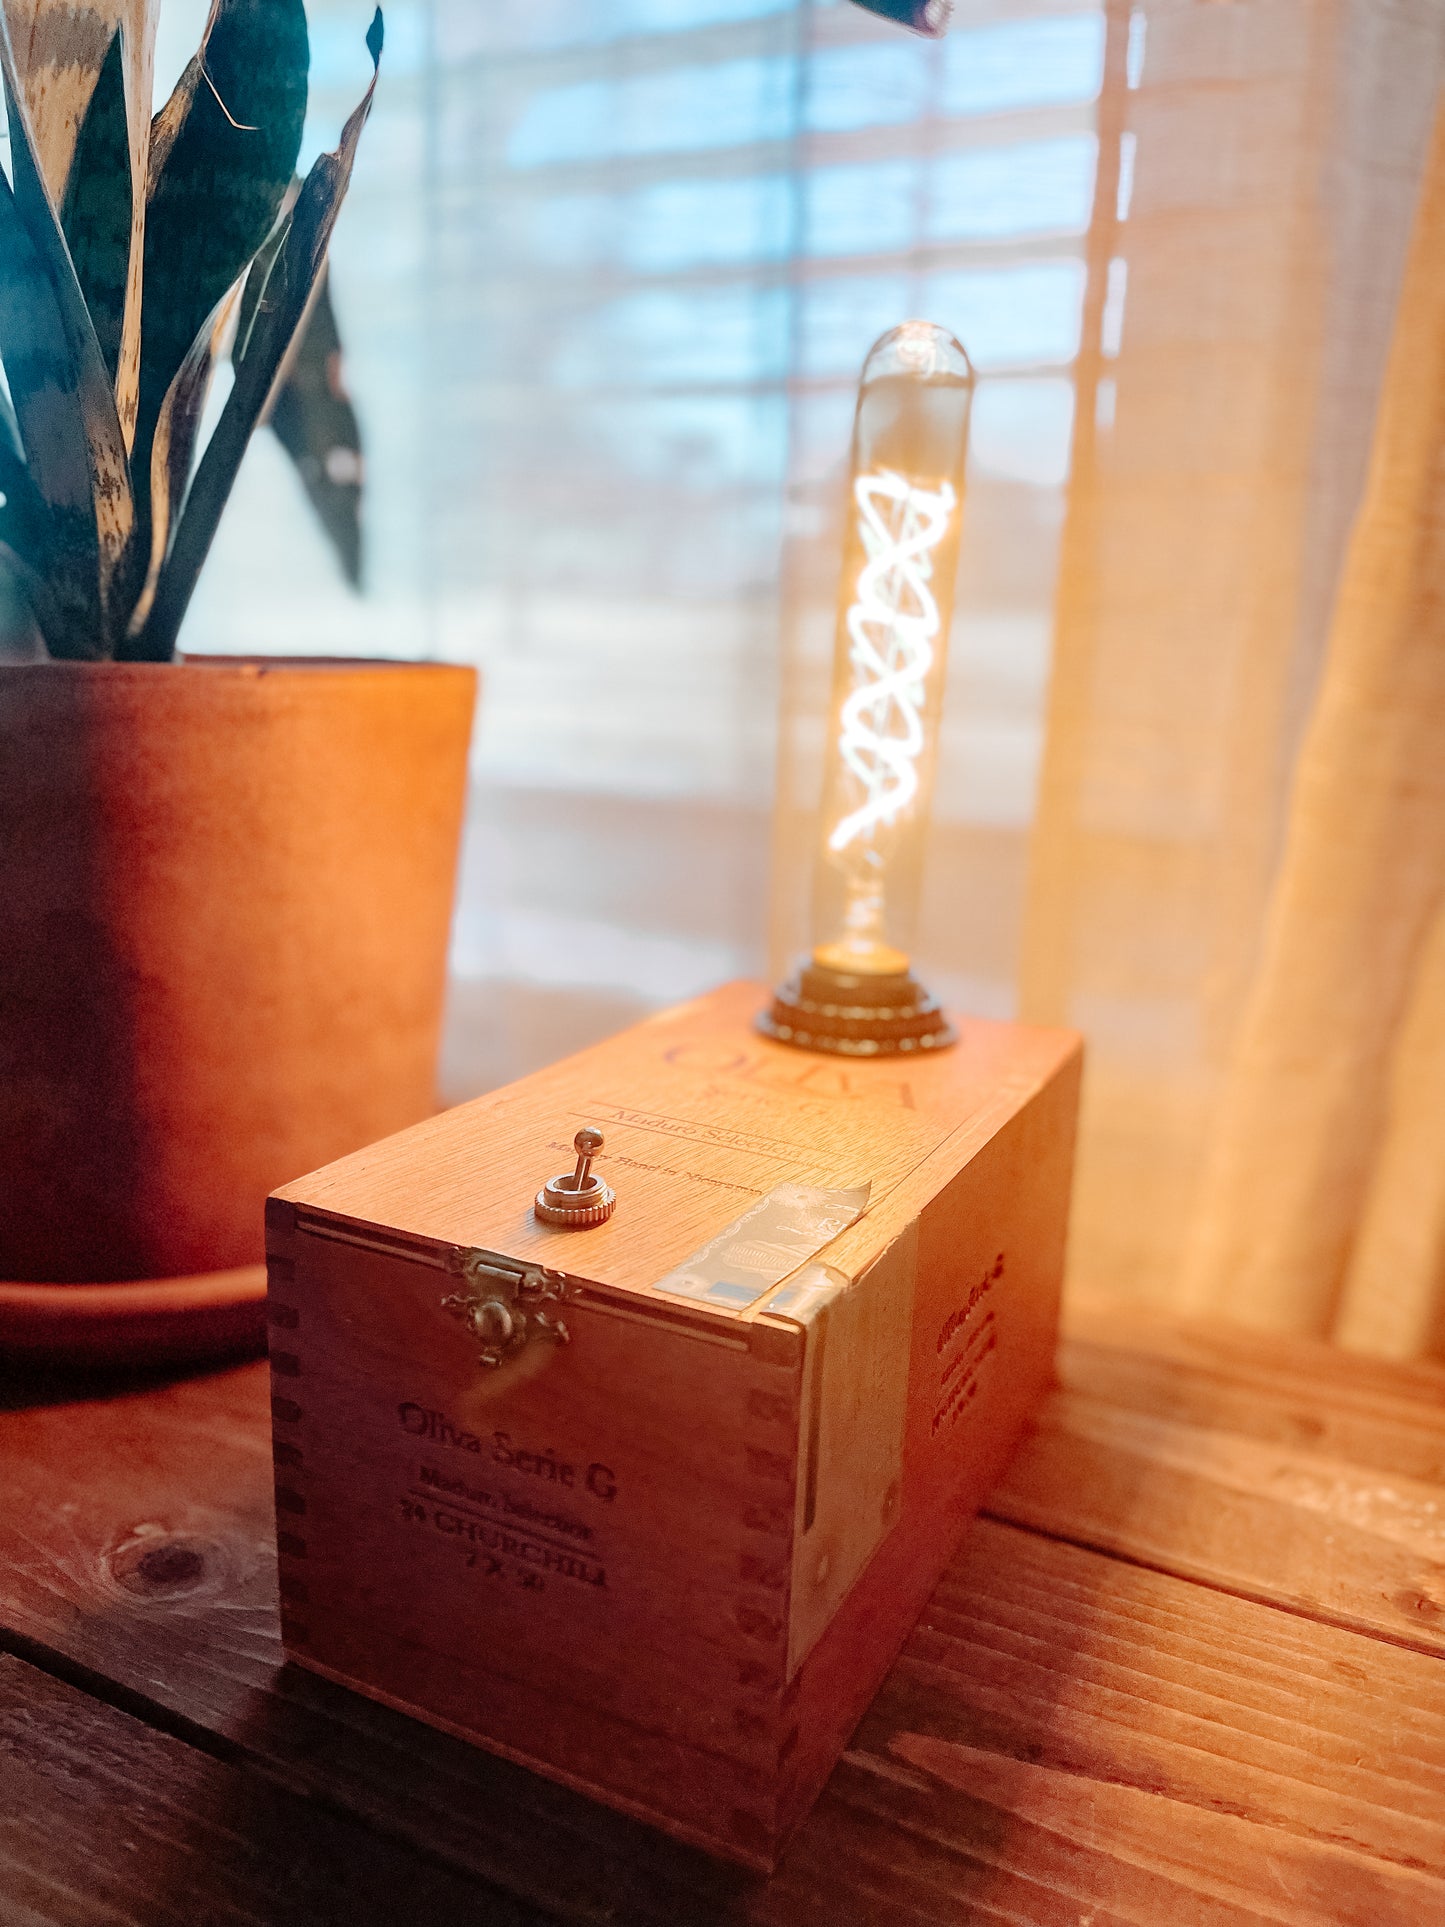 Cigar Box Lamp - Oliva Serie G